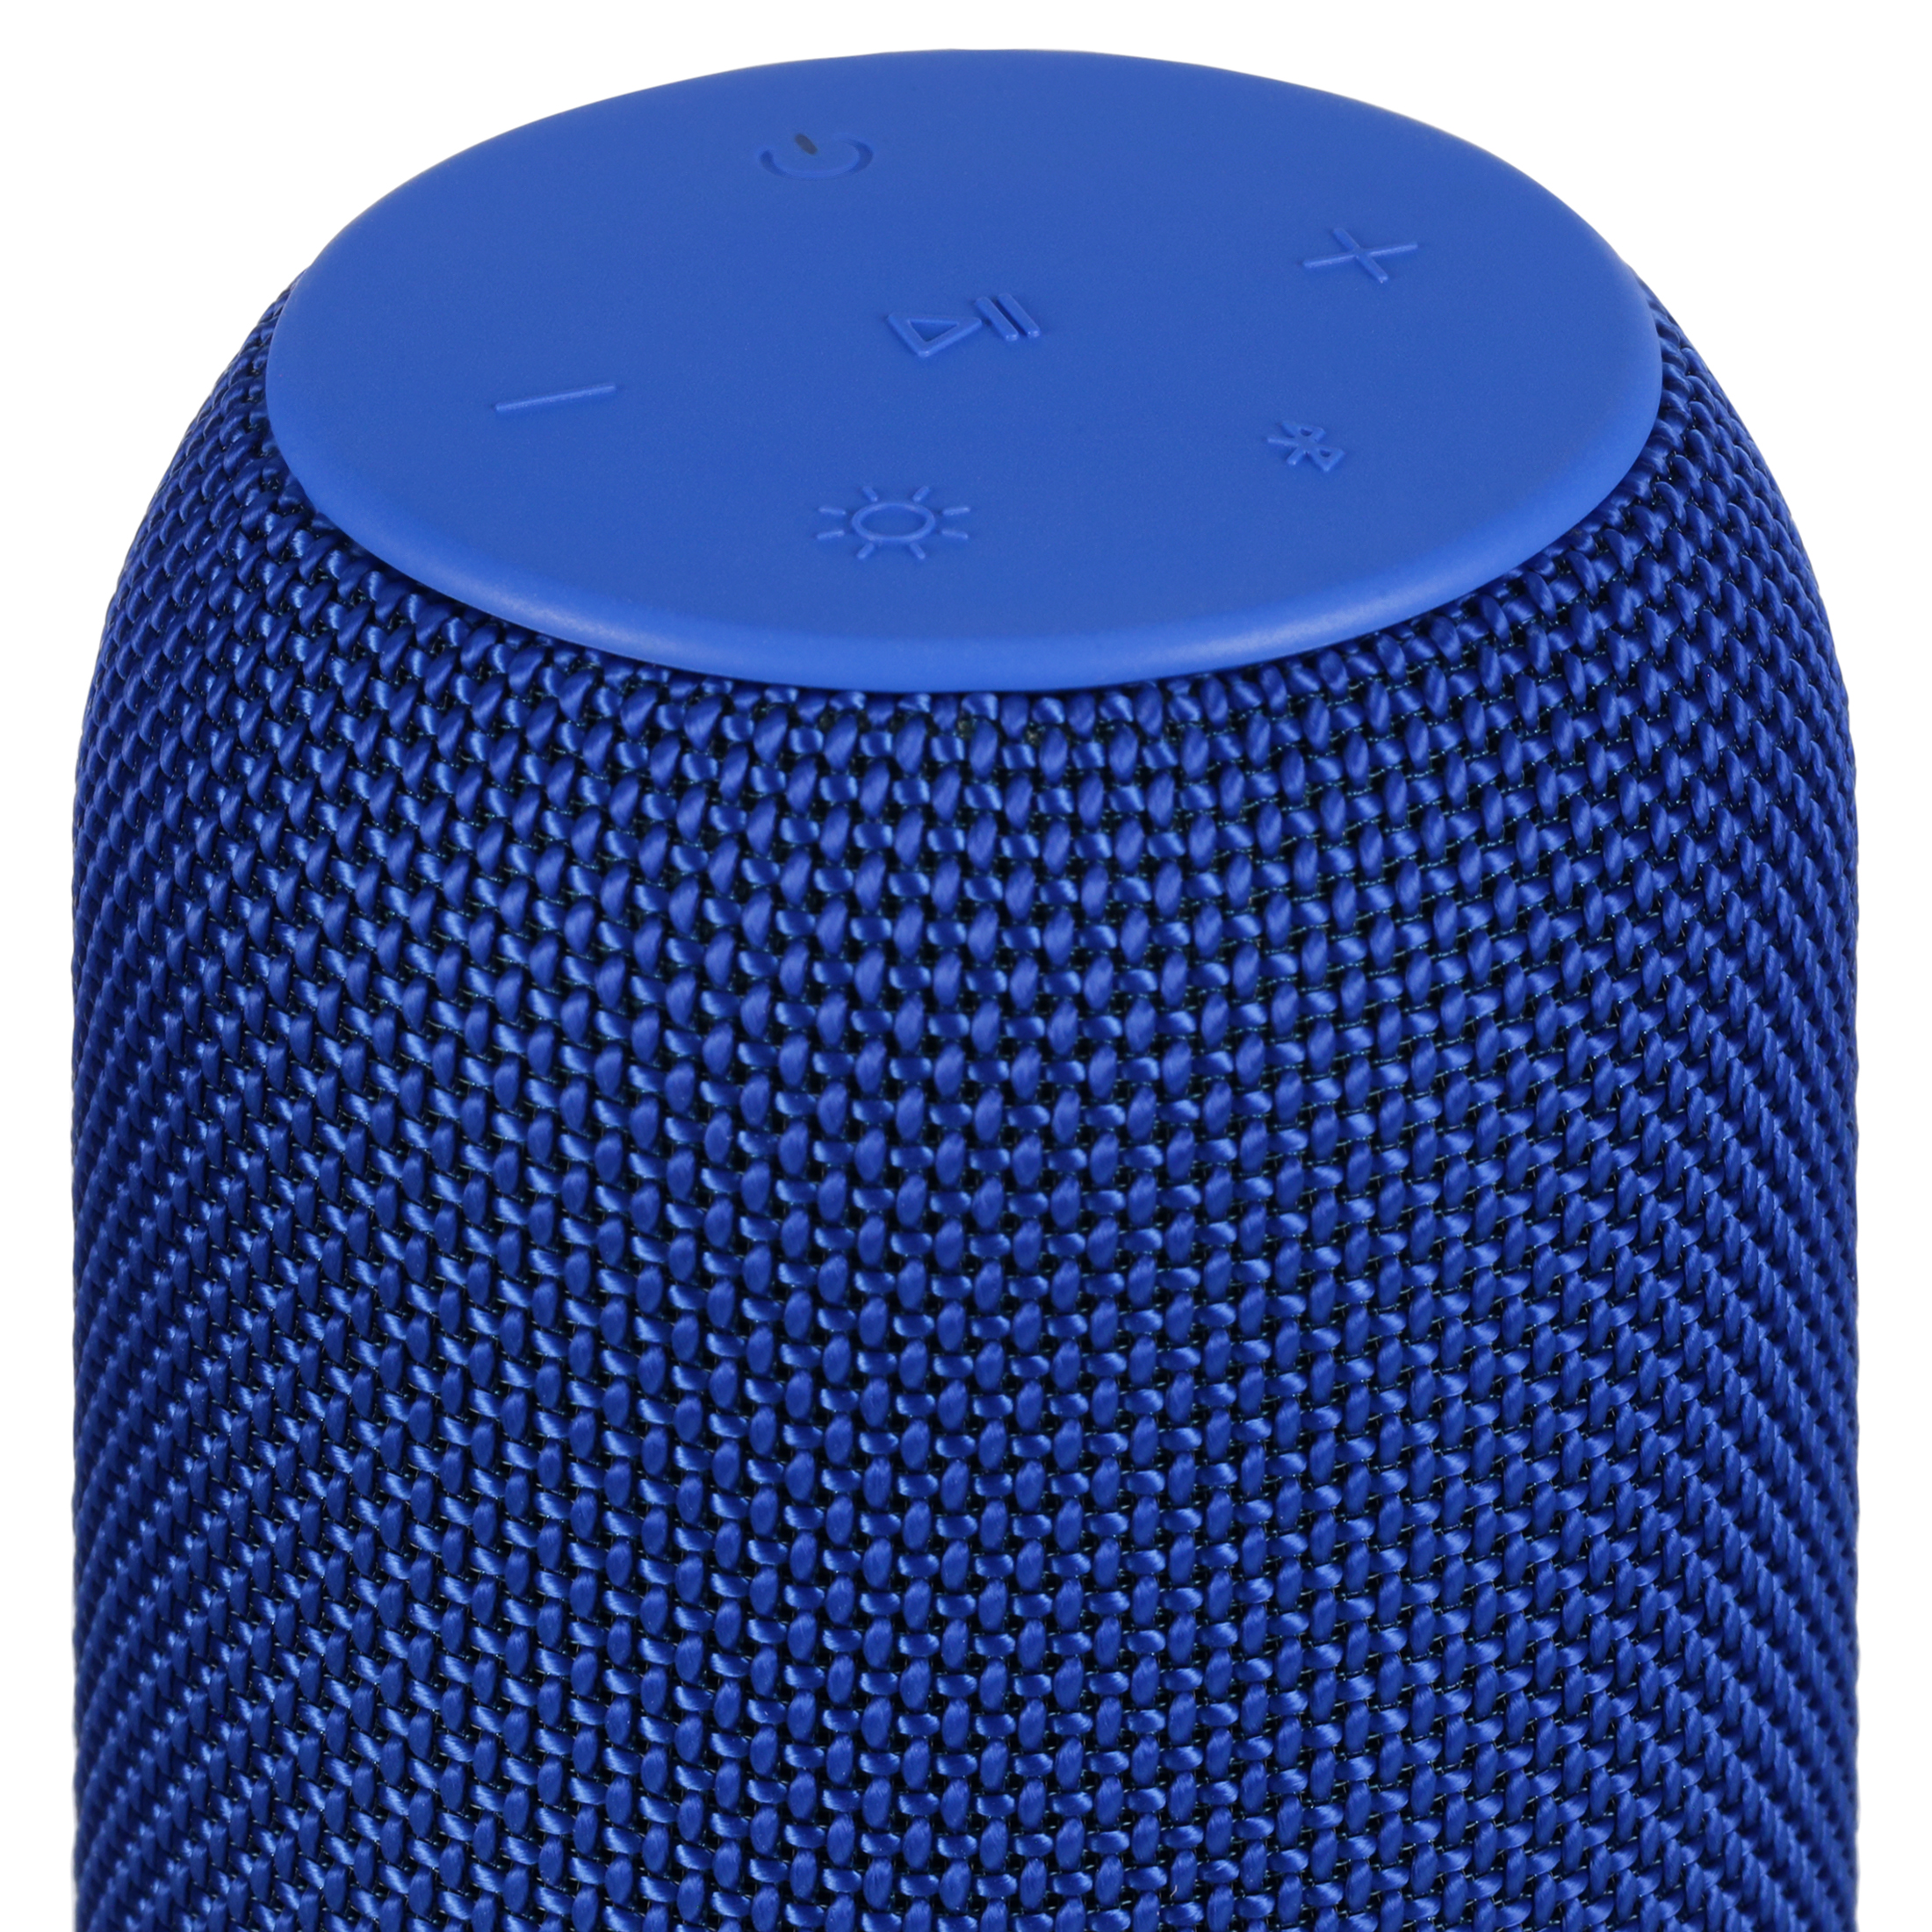 onn. Wireless Bluetooth Speaker with LED Lighting, Greystone 